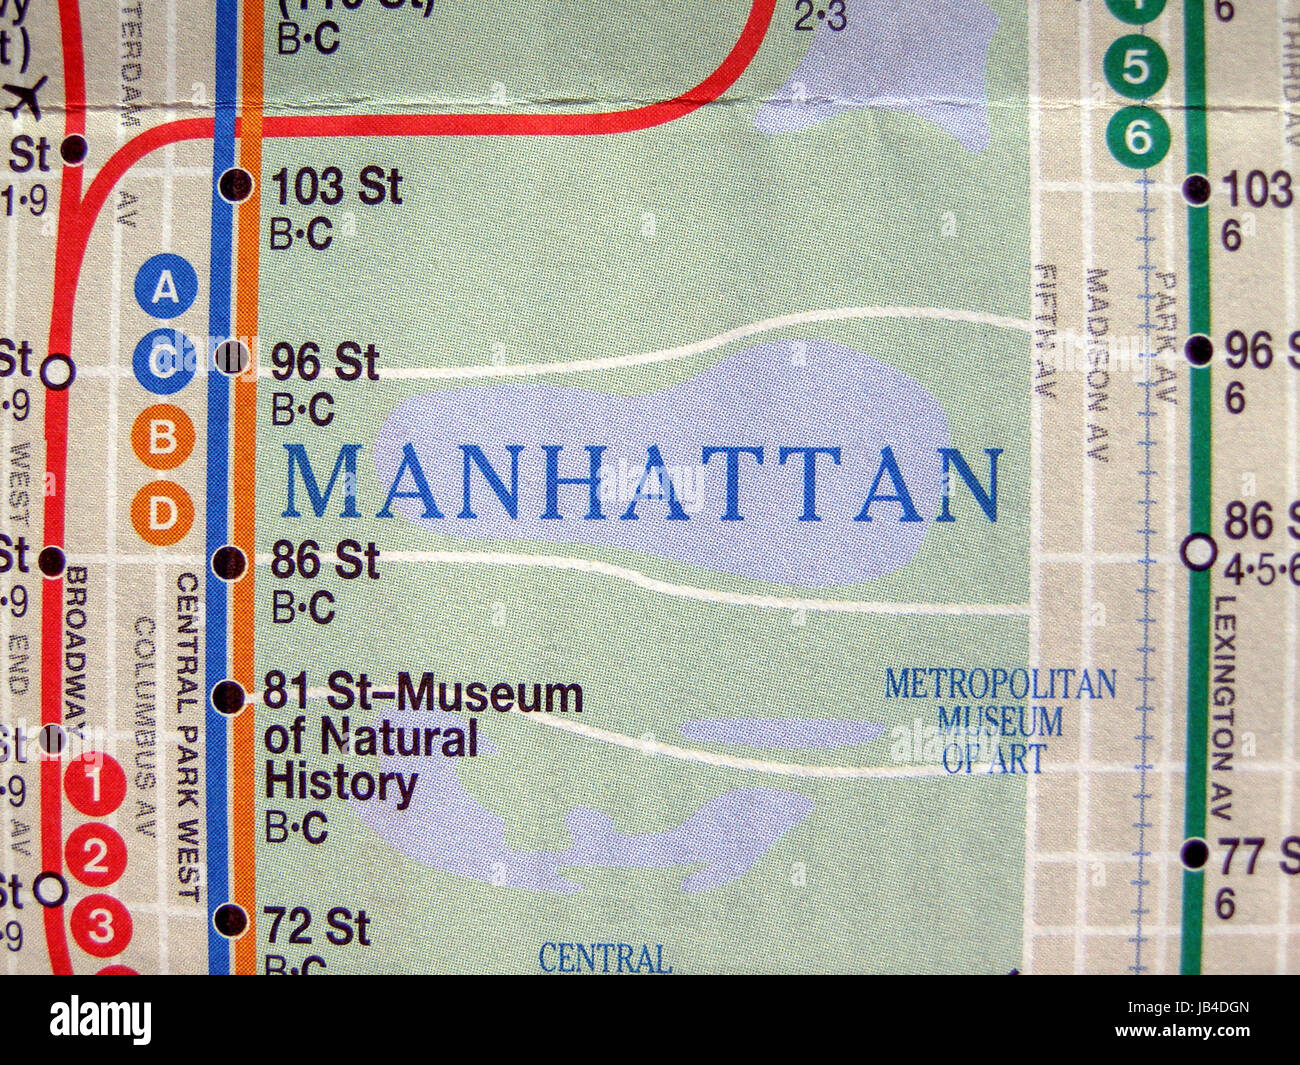 NEW YORK, USA - JUNE 25, 2008: Subway map of the New York